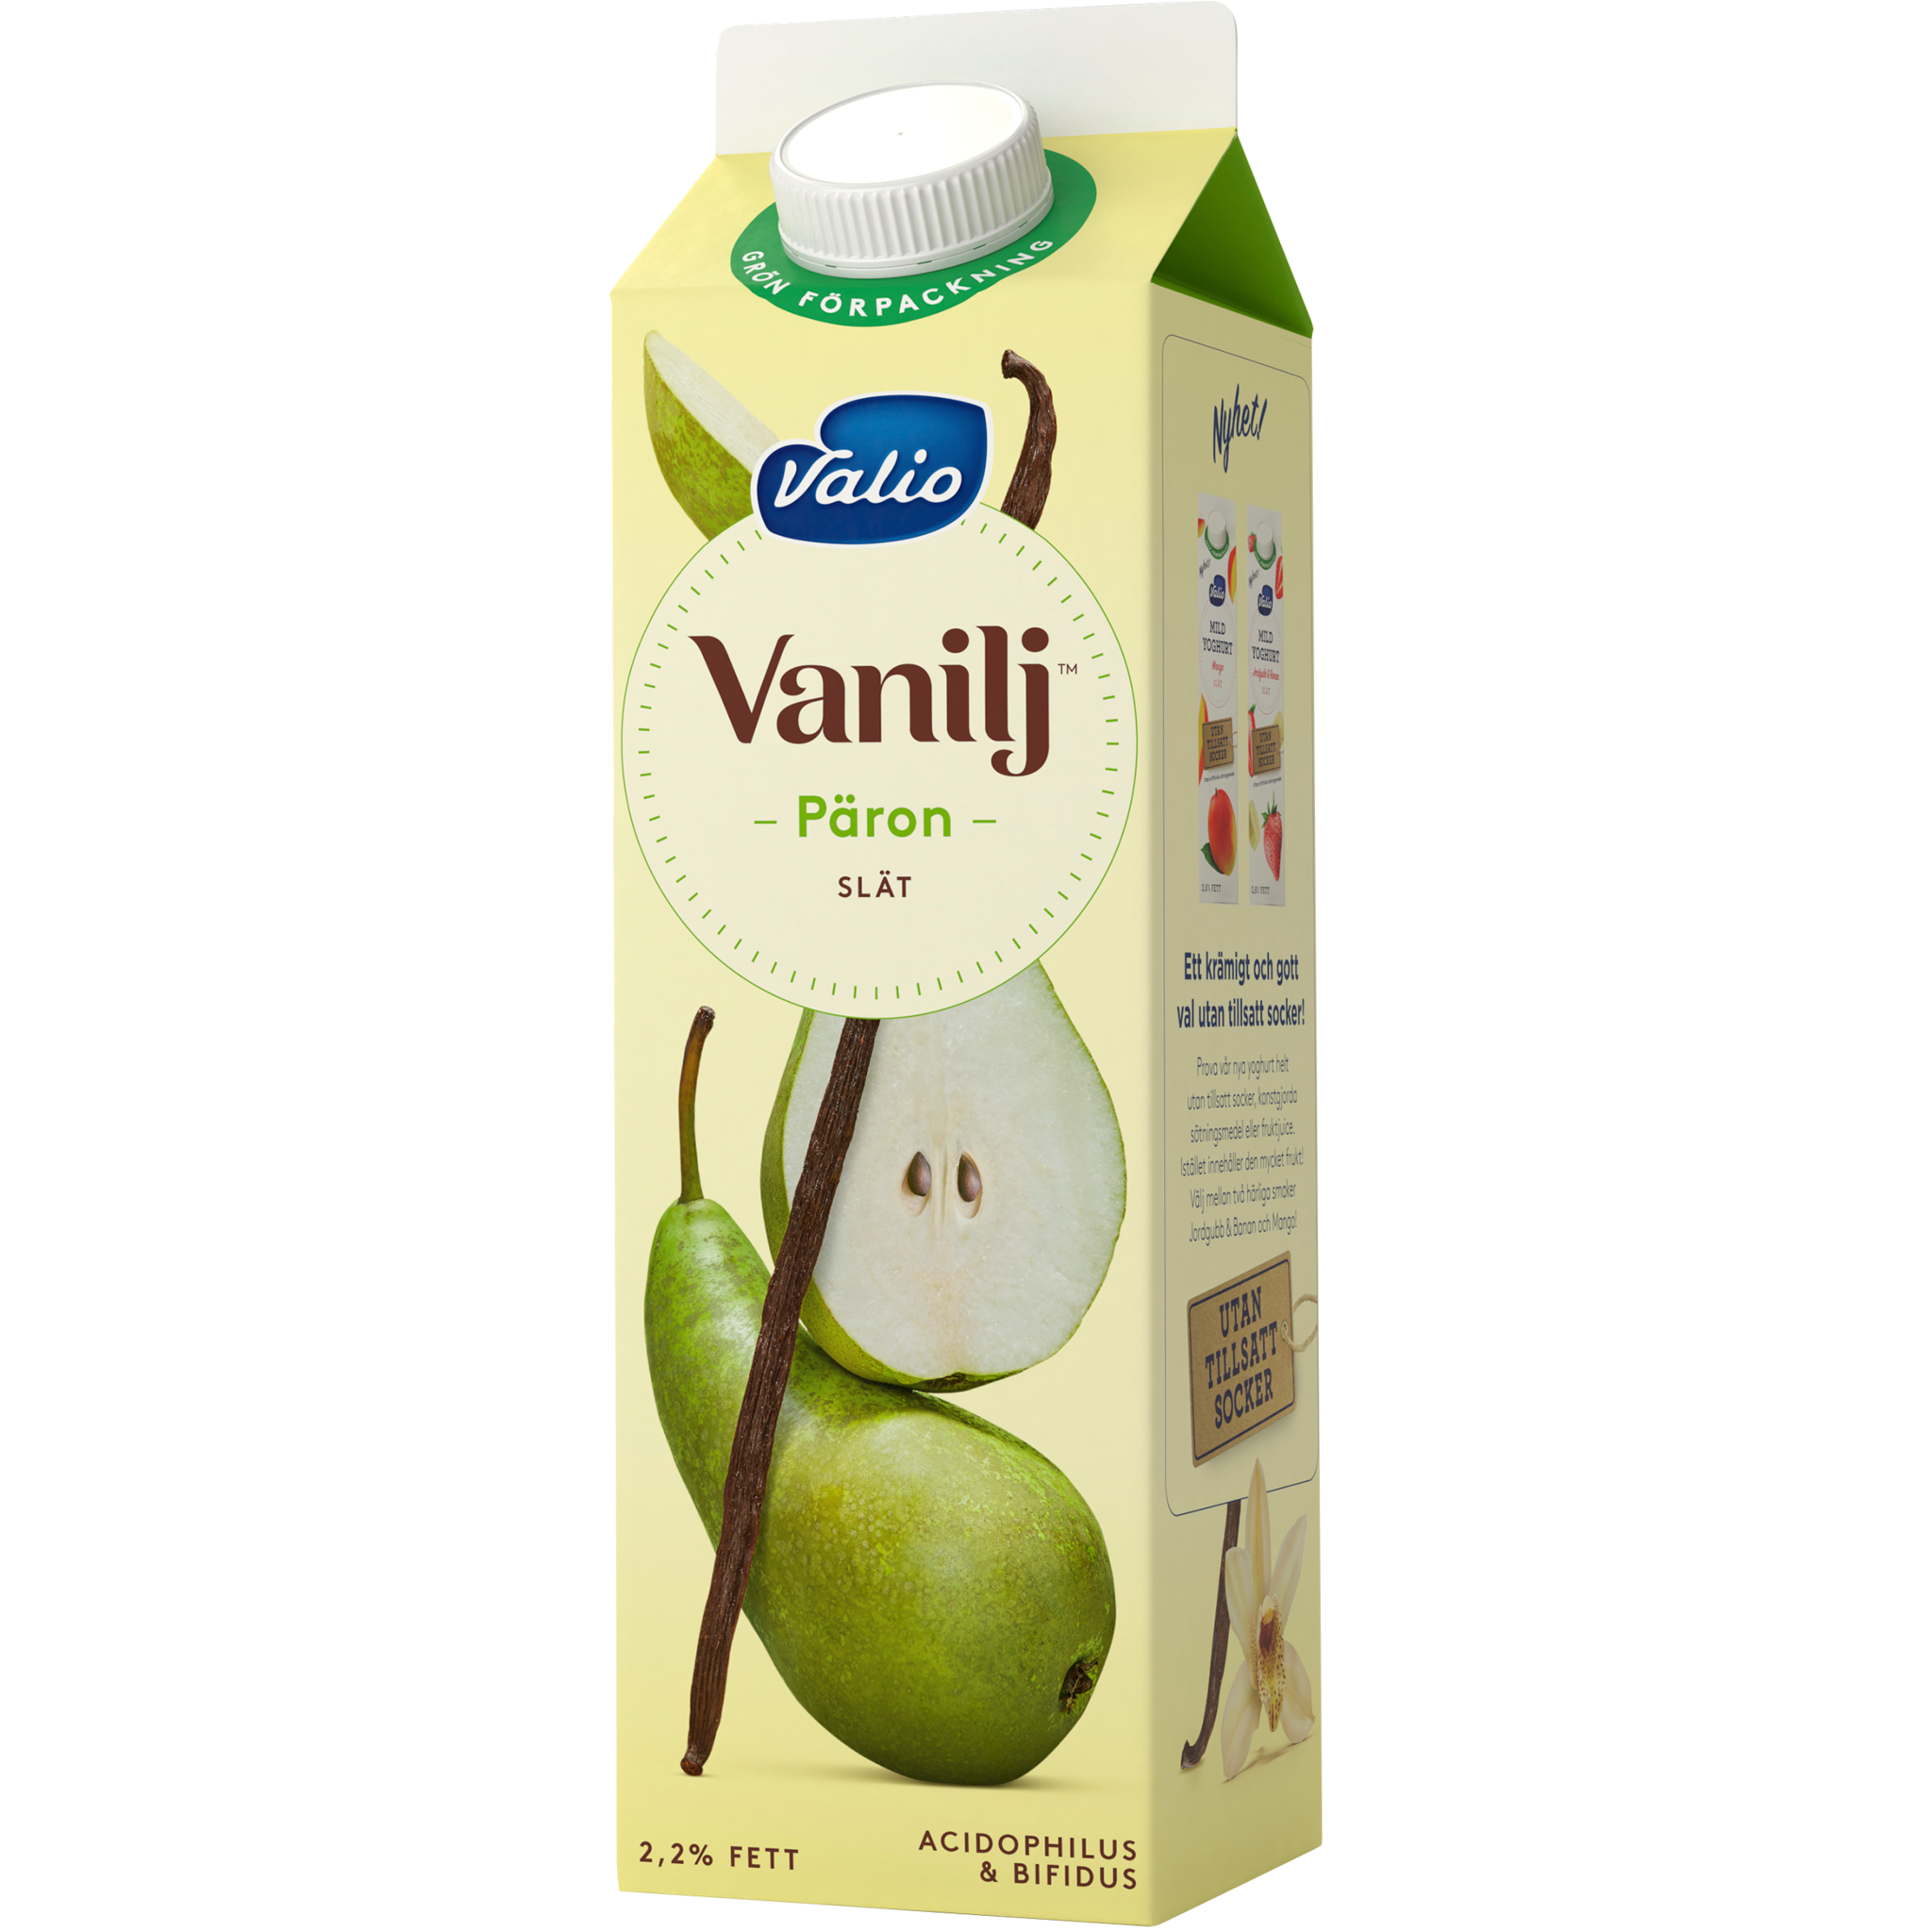 Valio Vanilj™ yoghurt päron | Valio